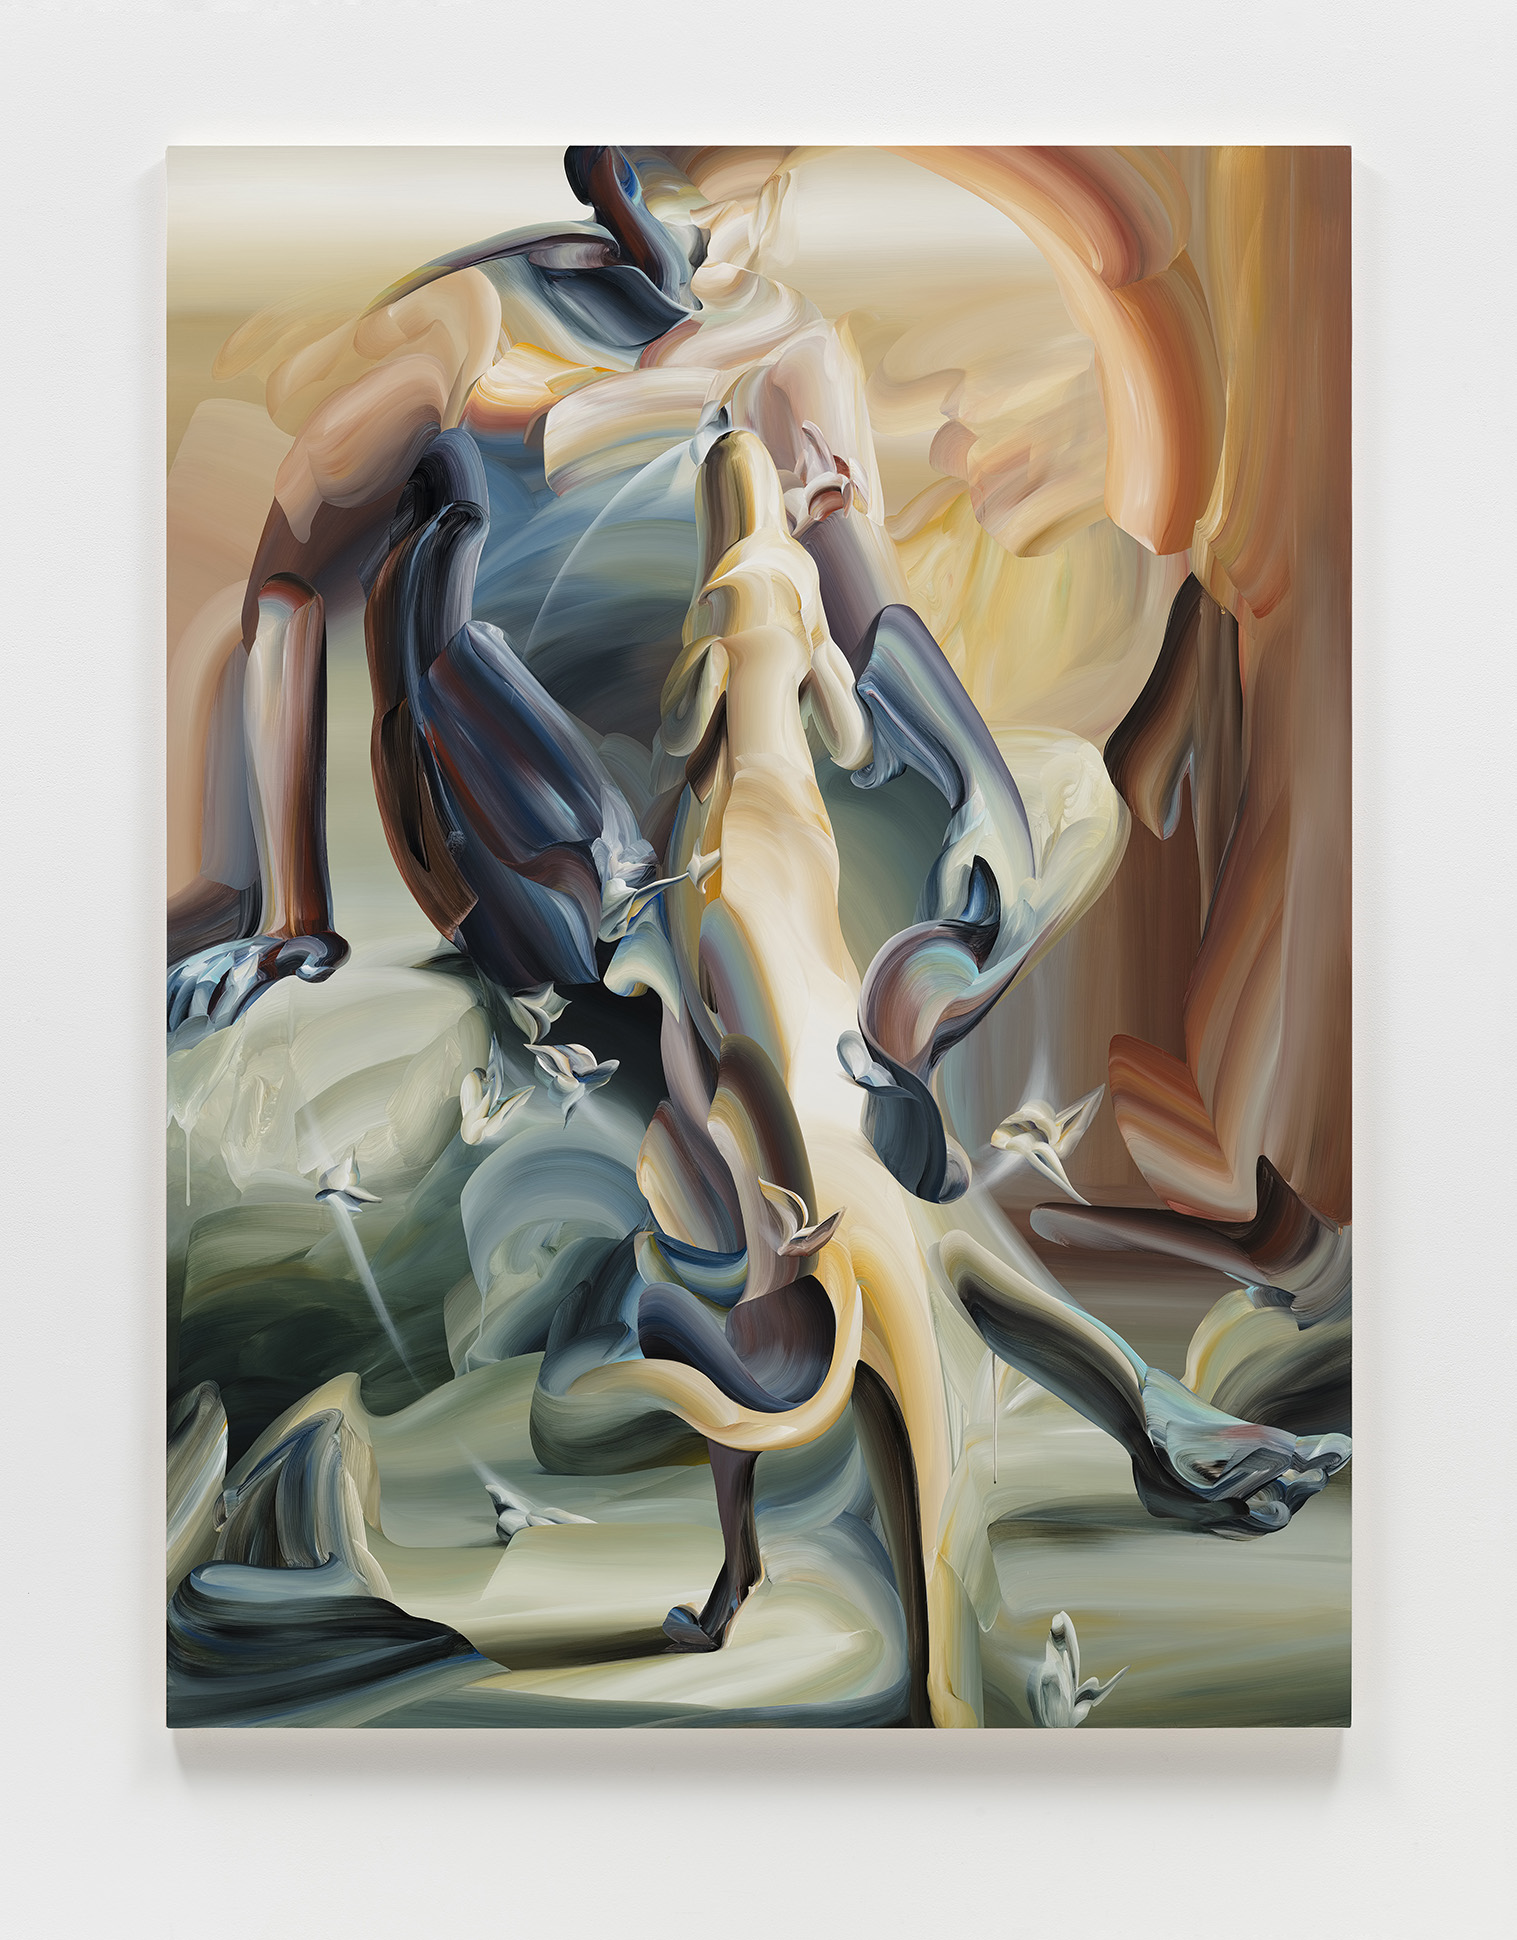 Huang Ko Wei, L’Etranger, 2021, acrylic on canvas, 160 x 120 cm